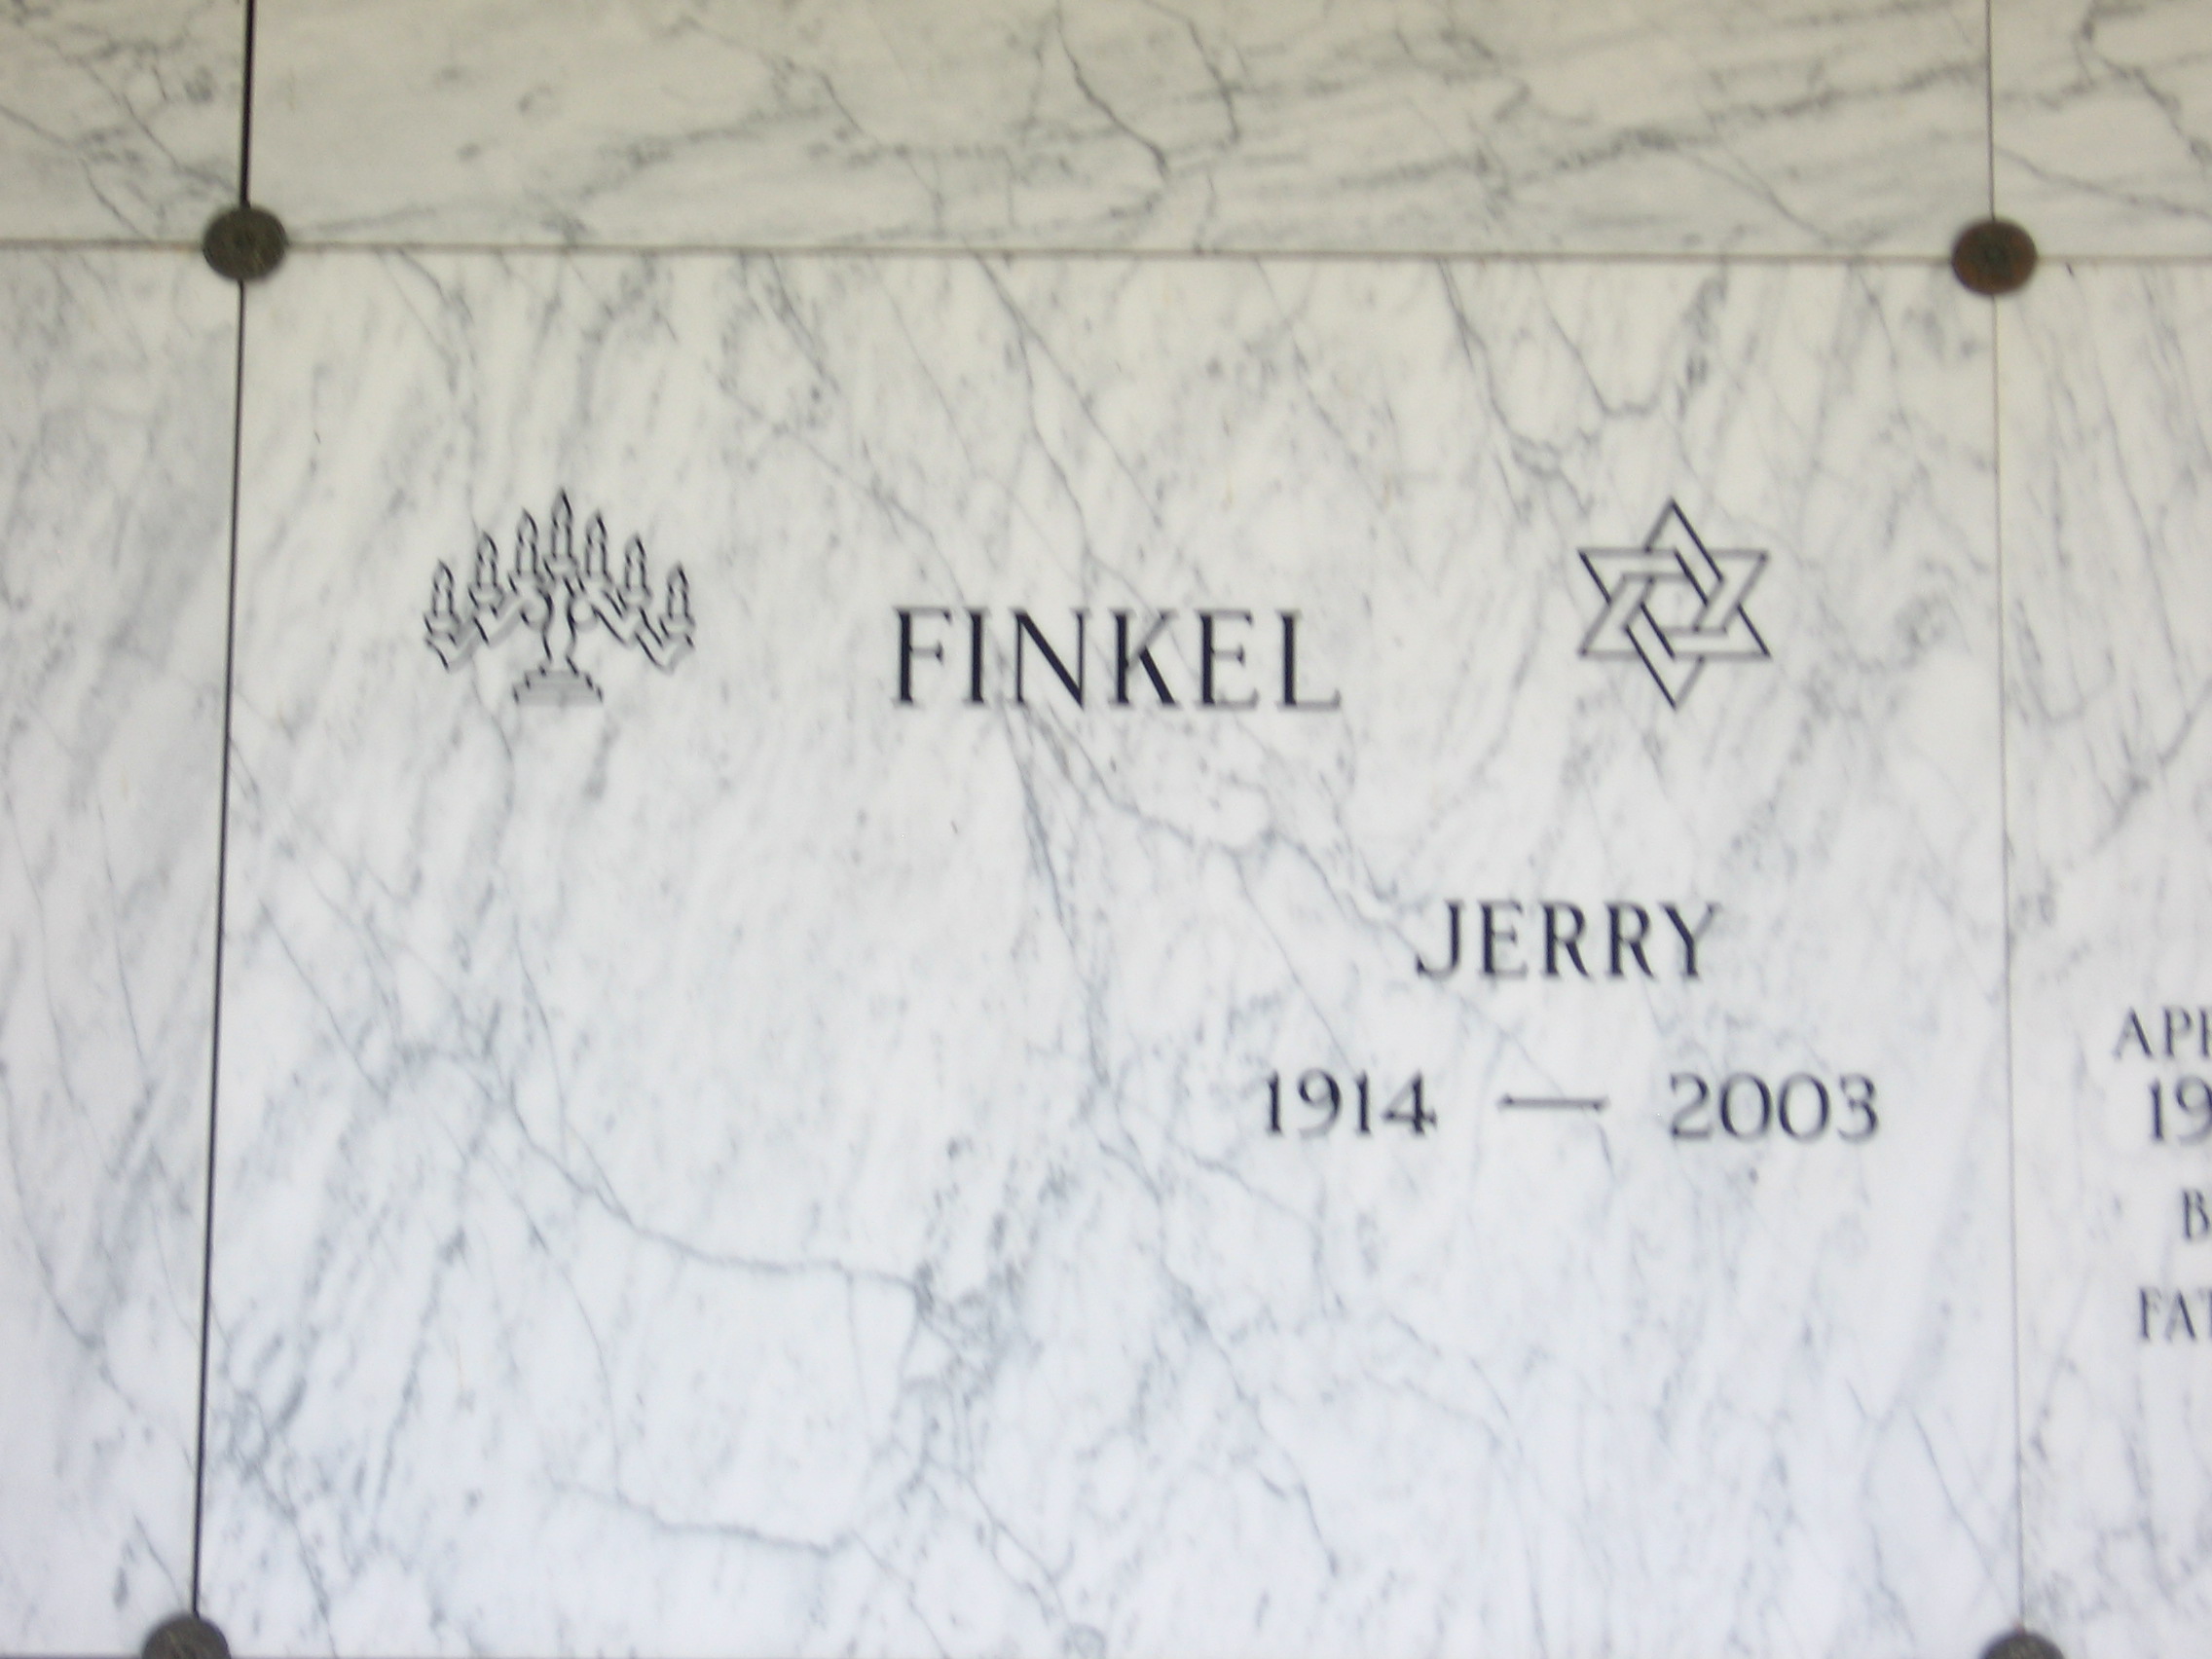 Jerry Finkel